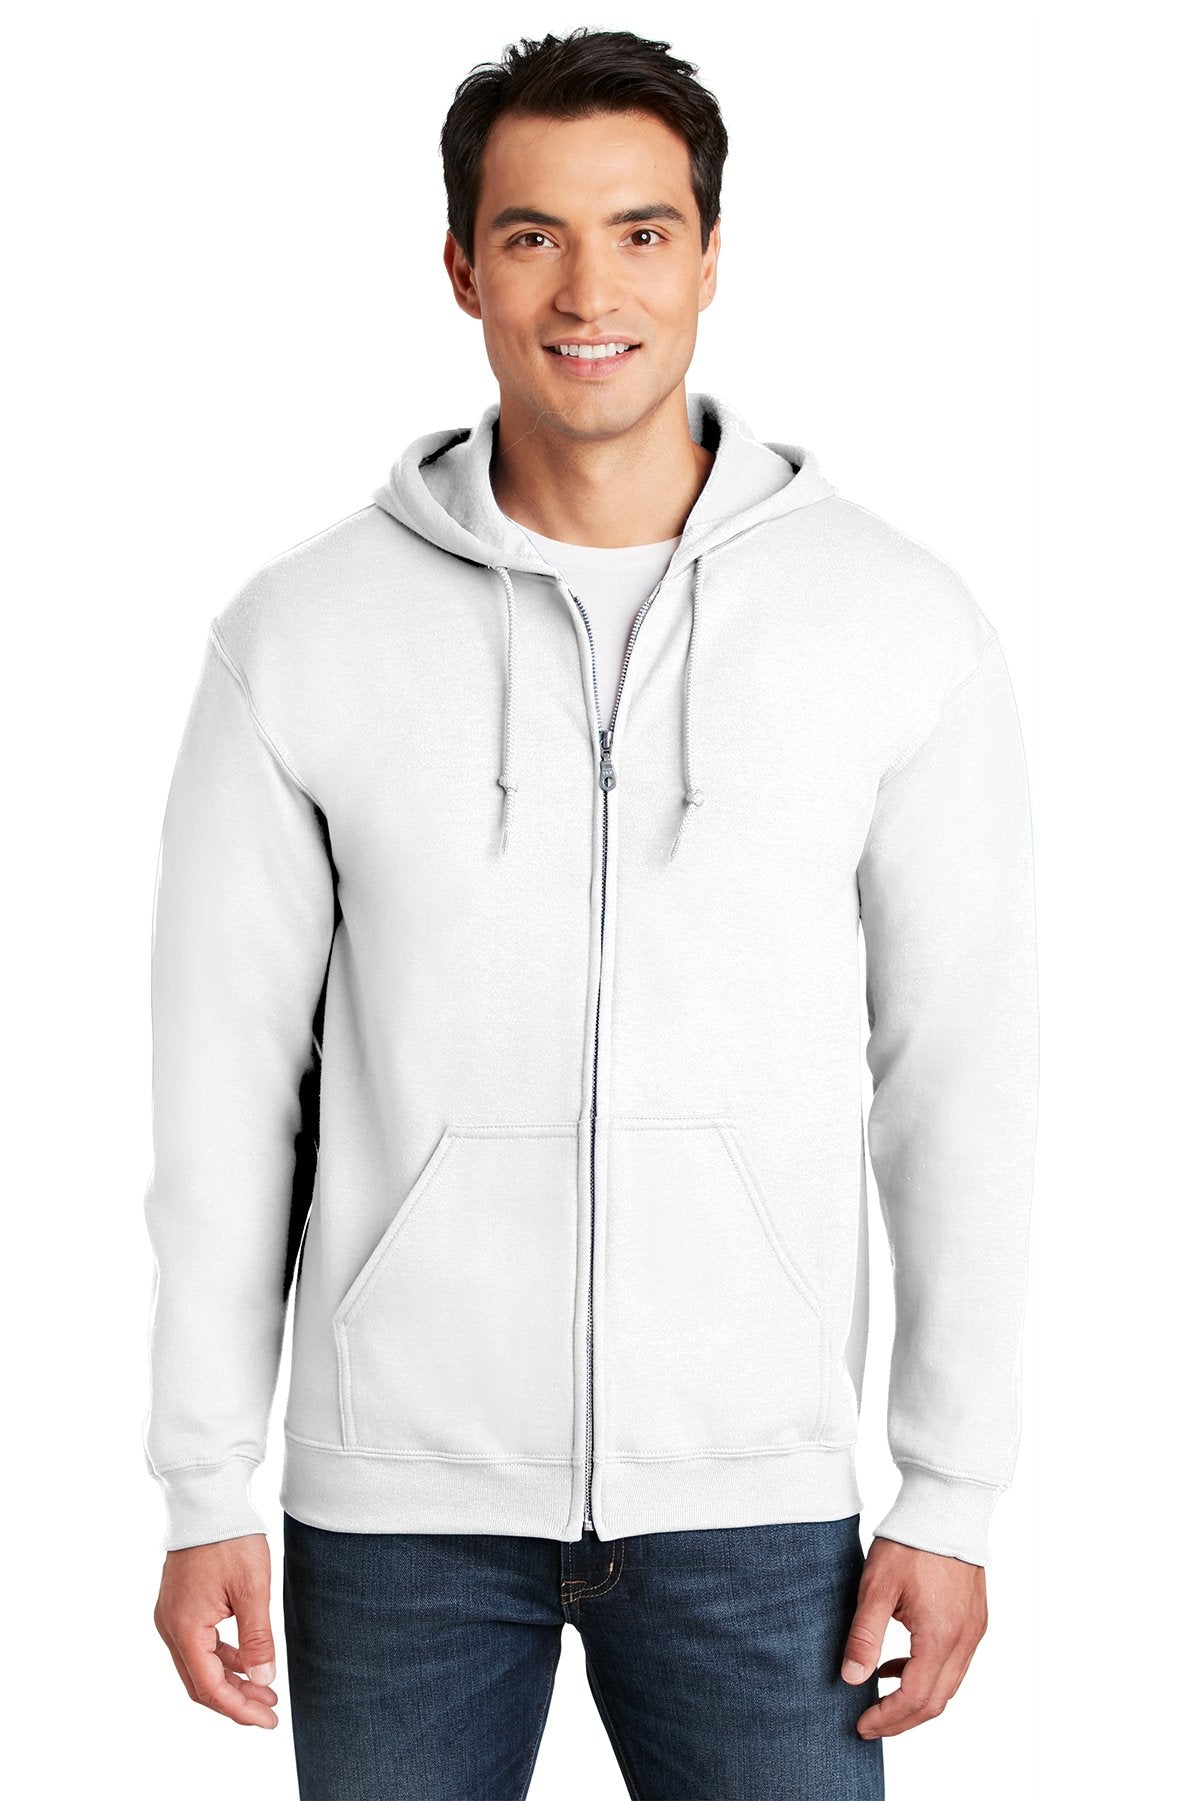 Gildan Heavy Blend Full Zip Hooded Sweatshirt in White, with a custom logo